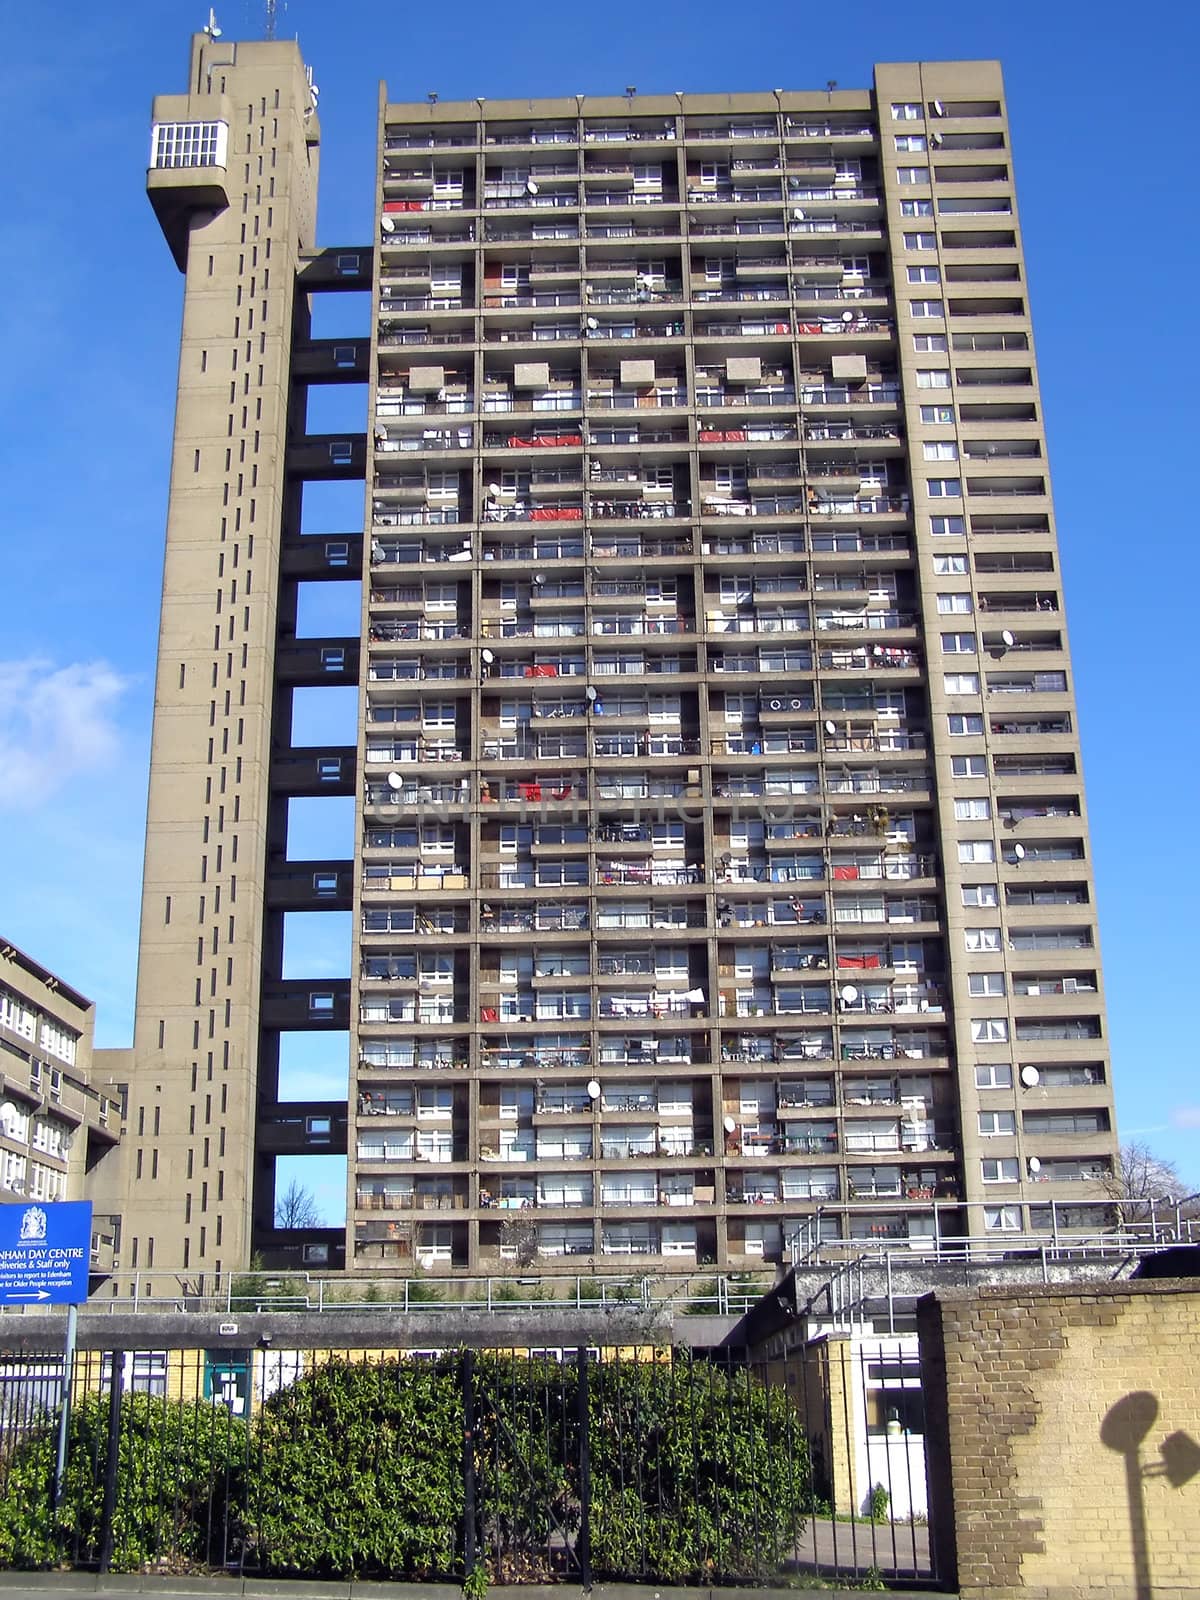 Trellick Tower brutalist architecture London